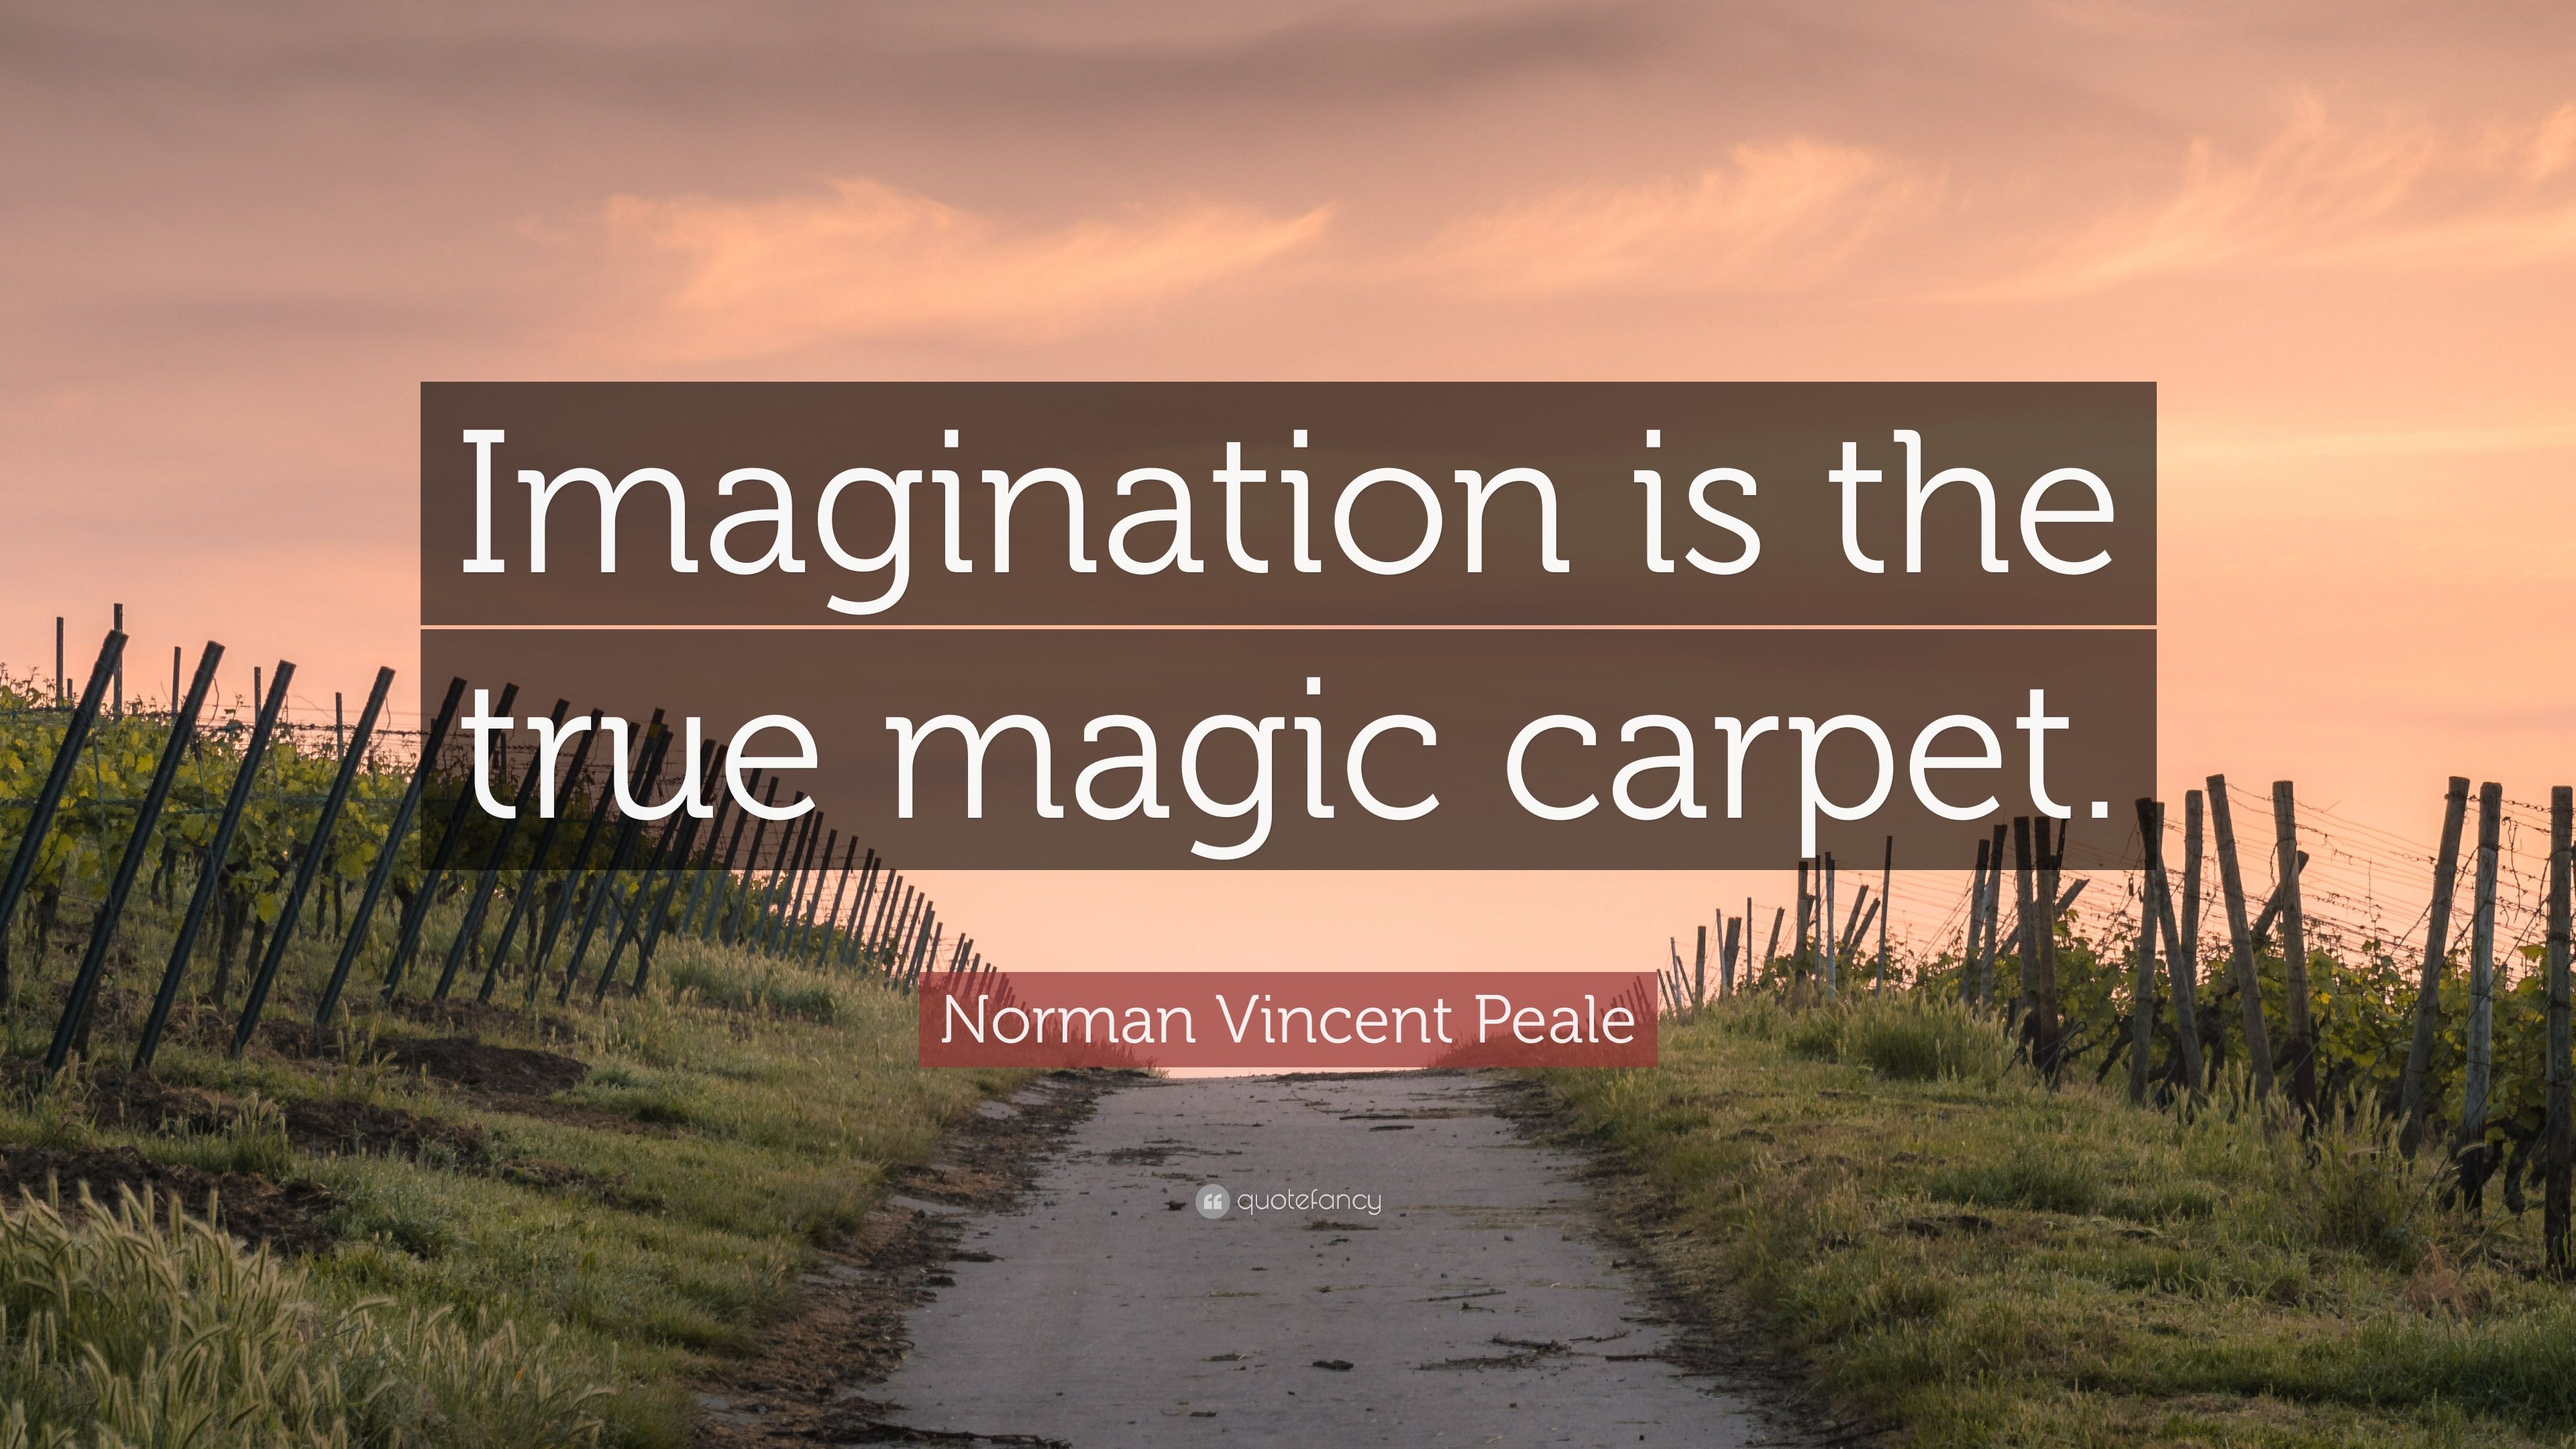 Norman Vincent Peale Quote: “Imagination is the true magic carpet